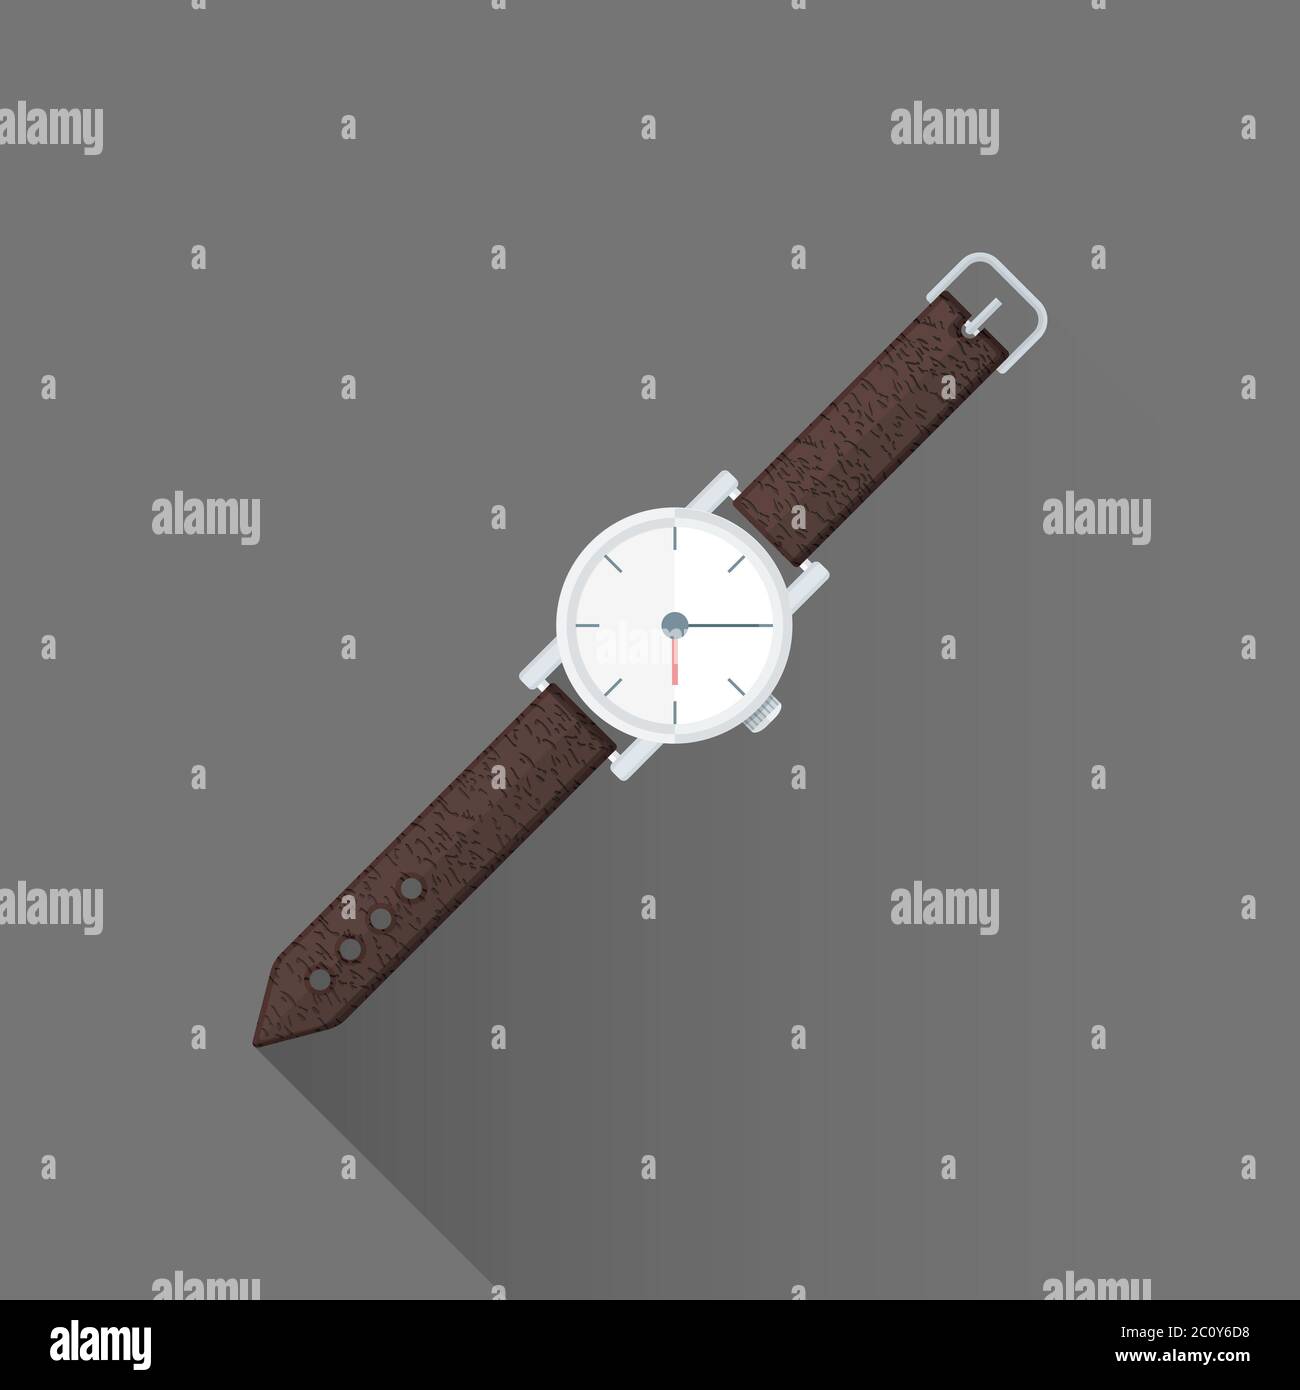 vector flat style men's wrist watch illustration icon Stock Photo